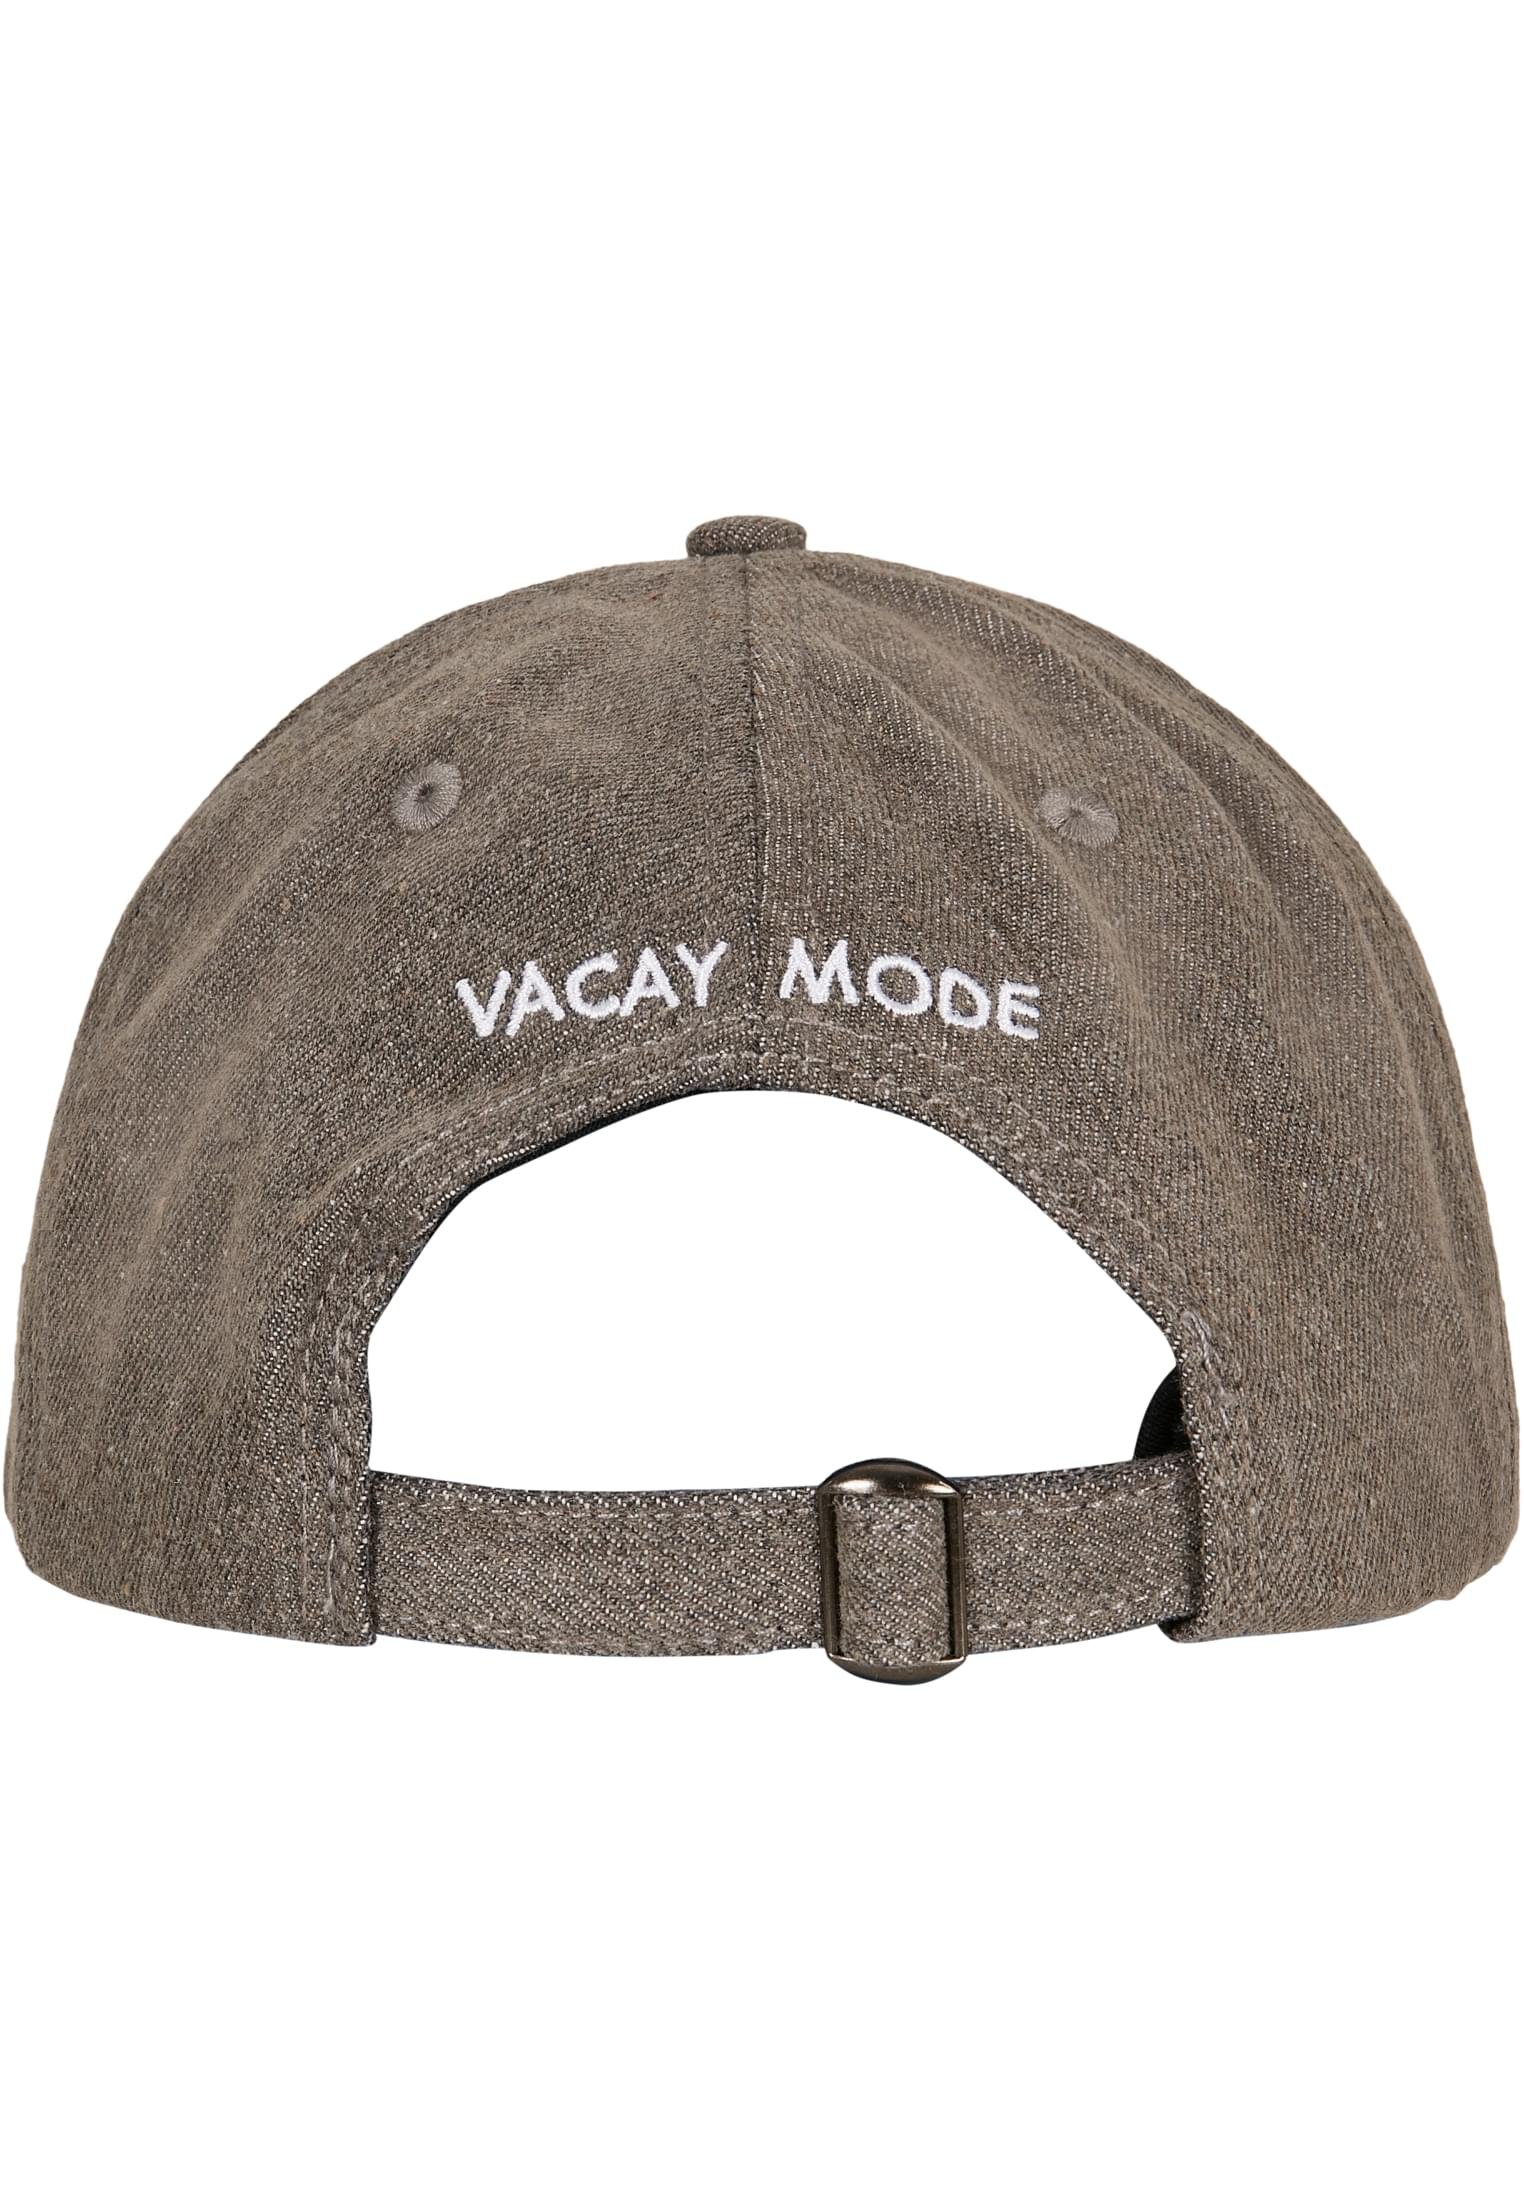 C&S WL Vacay Mode Strapback Cap black/white one size